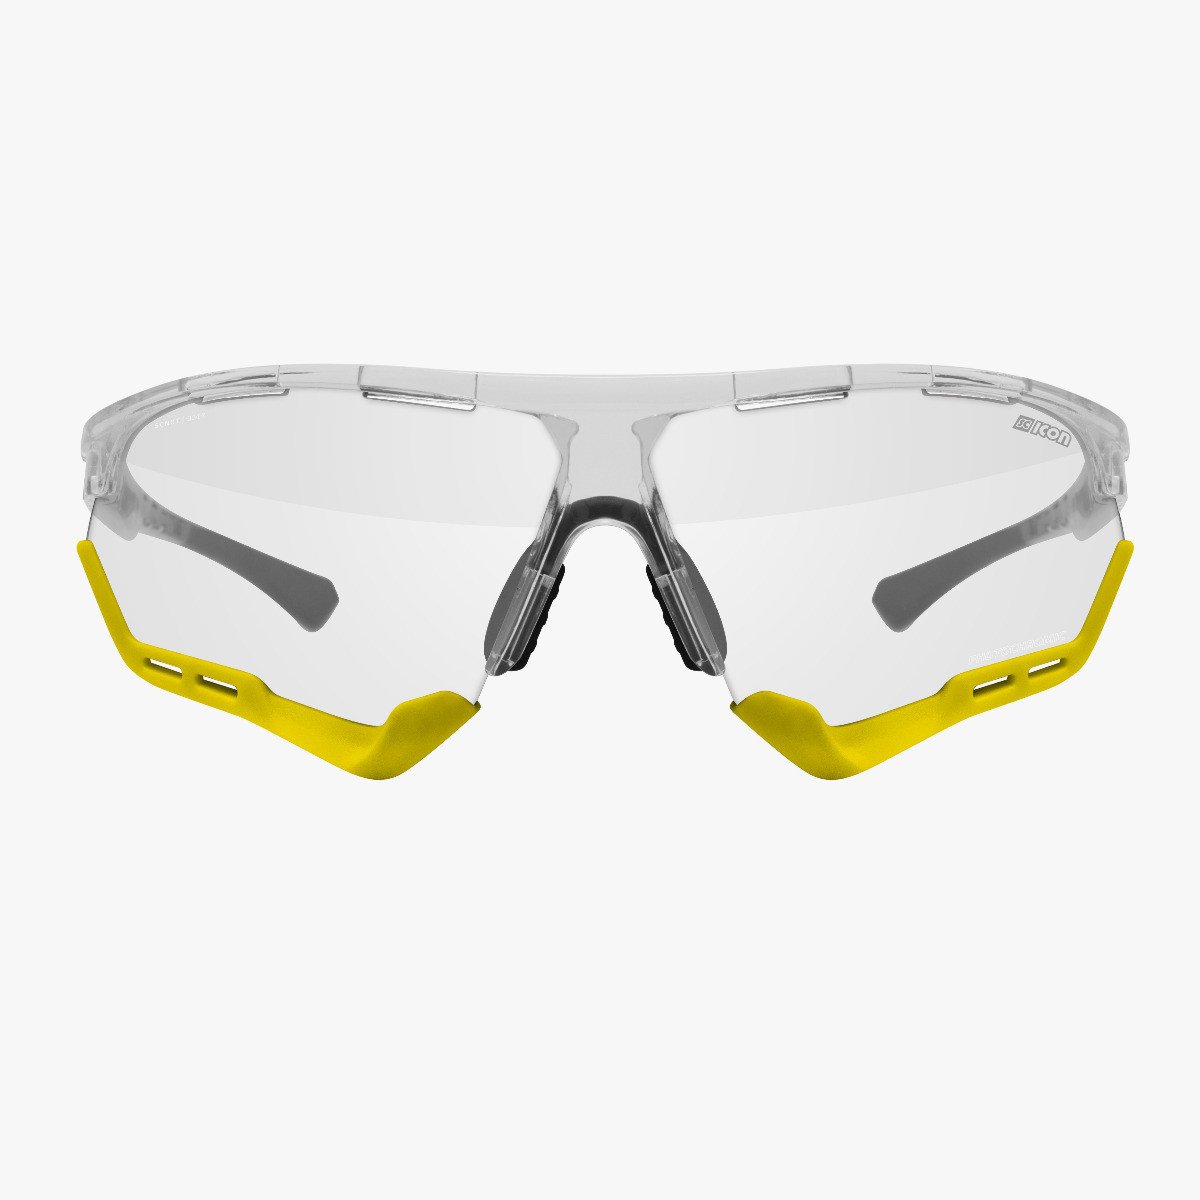 Aerocomfort cycling sunglasses scnxt photochromic crystal frame silver lenses EY19180705
